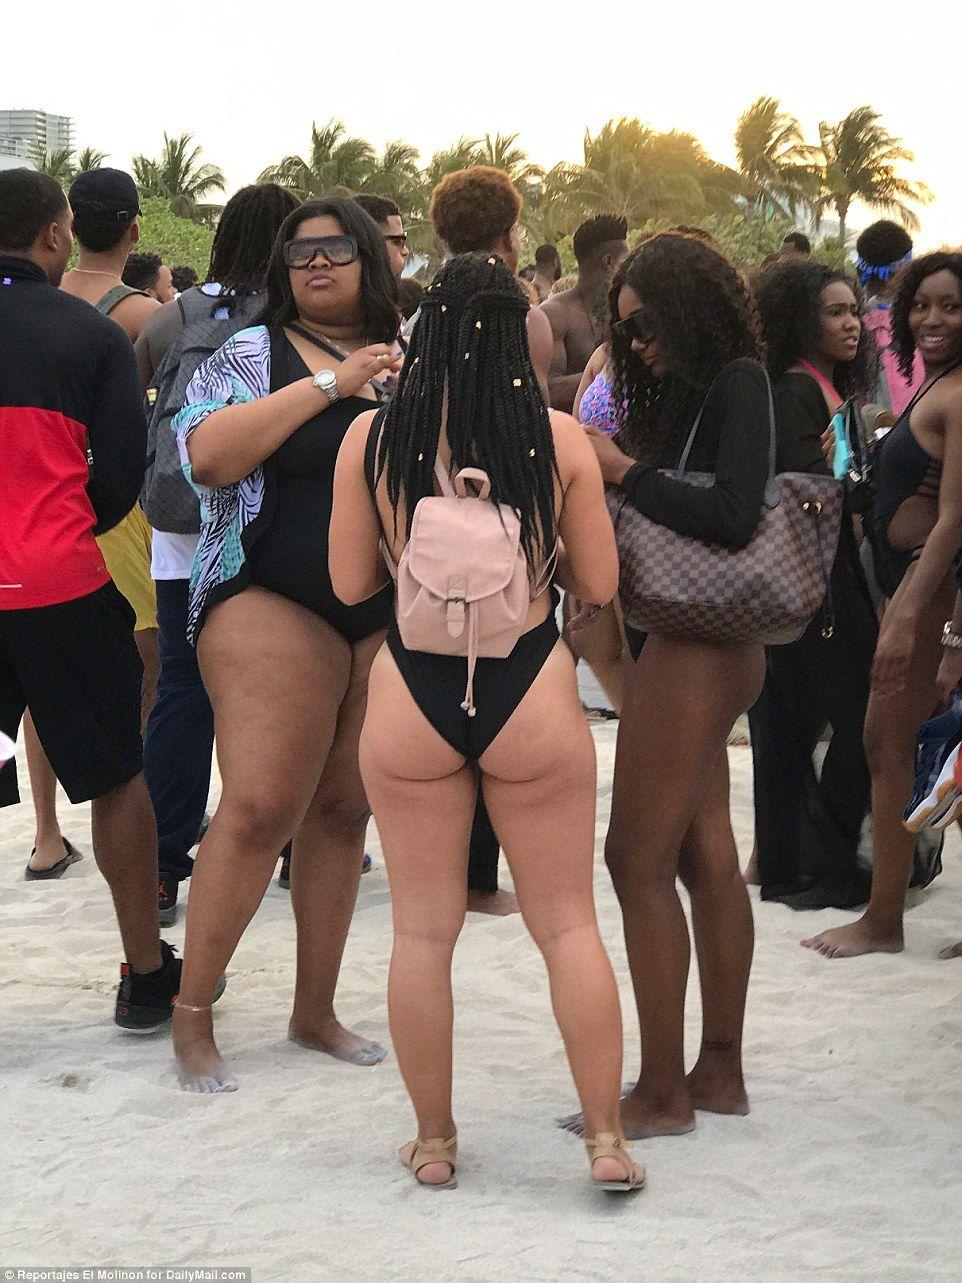 Panama city and gloryhole - Real Naked Girls